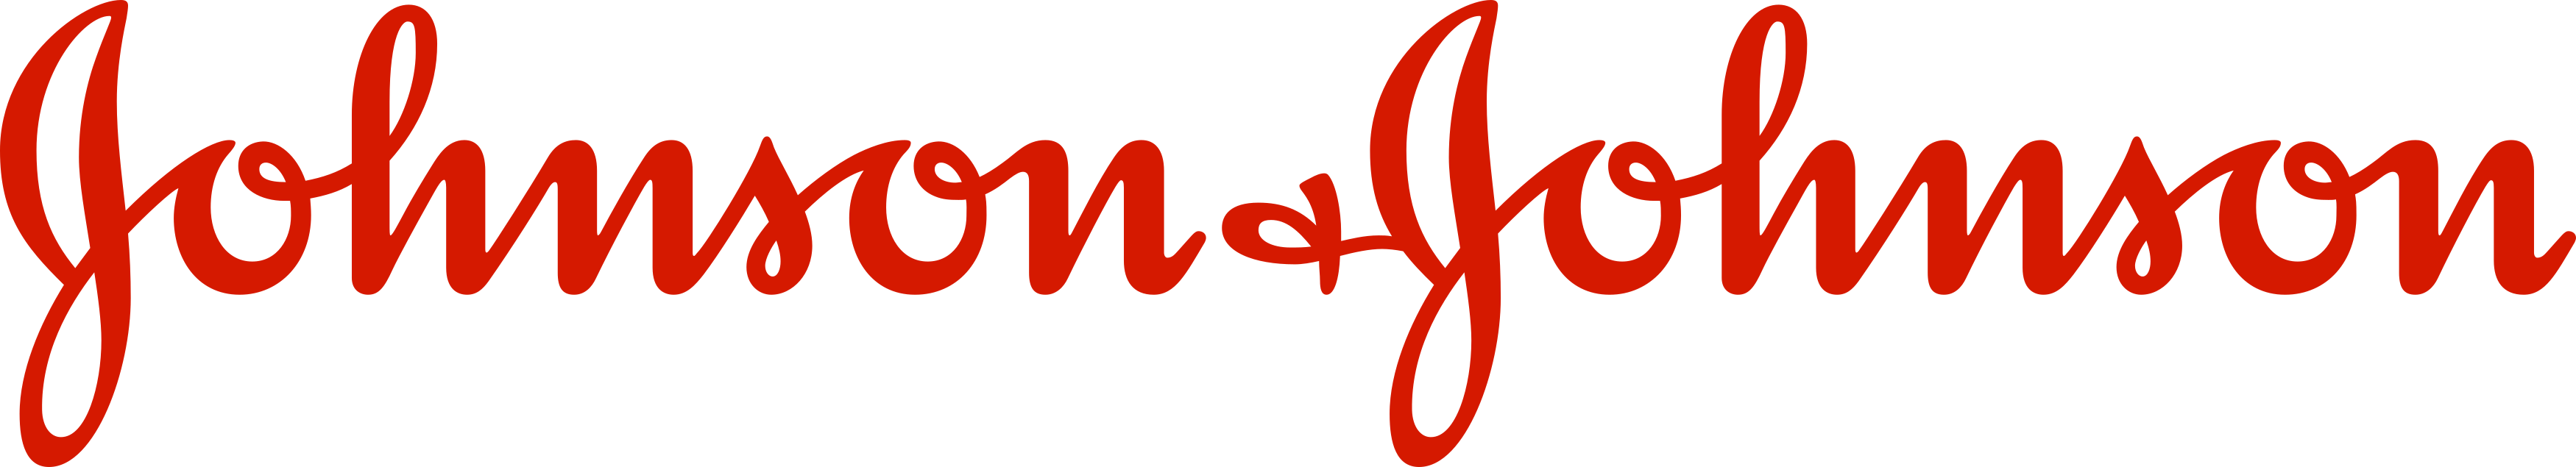 Johnson-and-Johnson_Logo